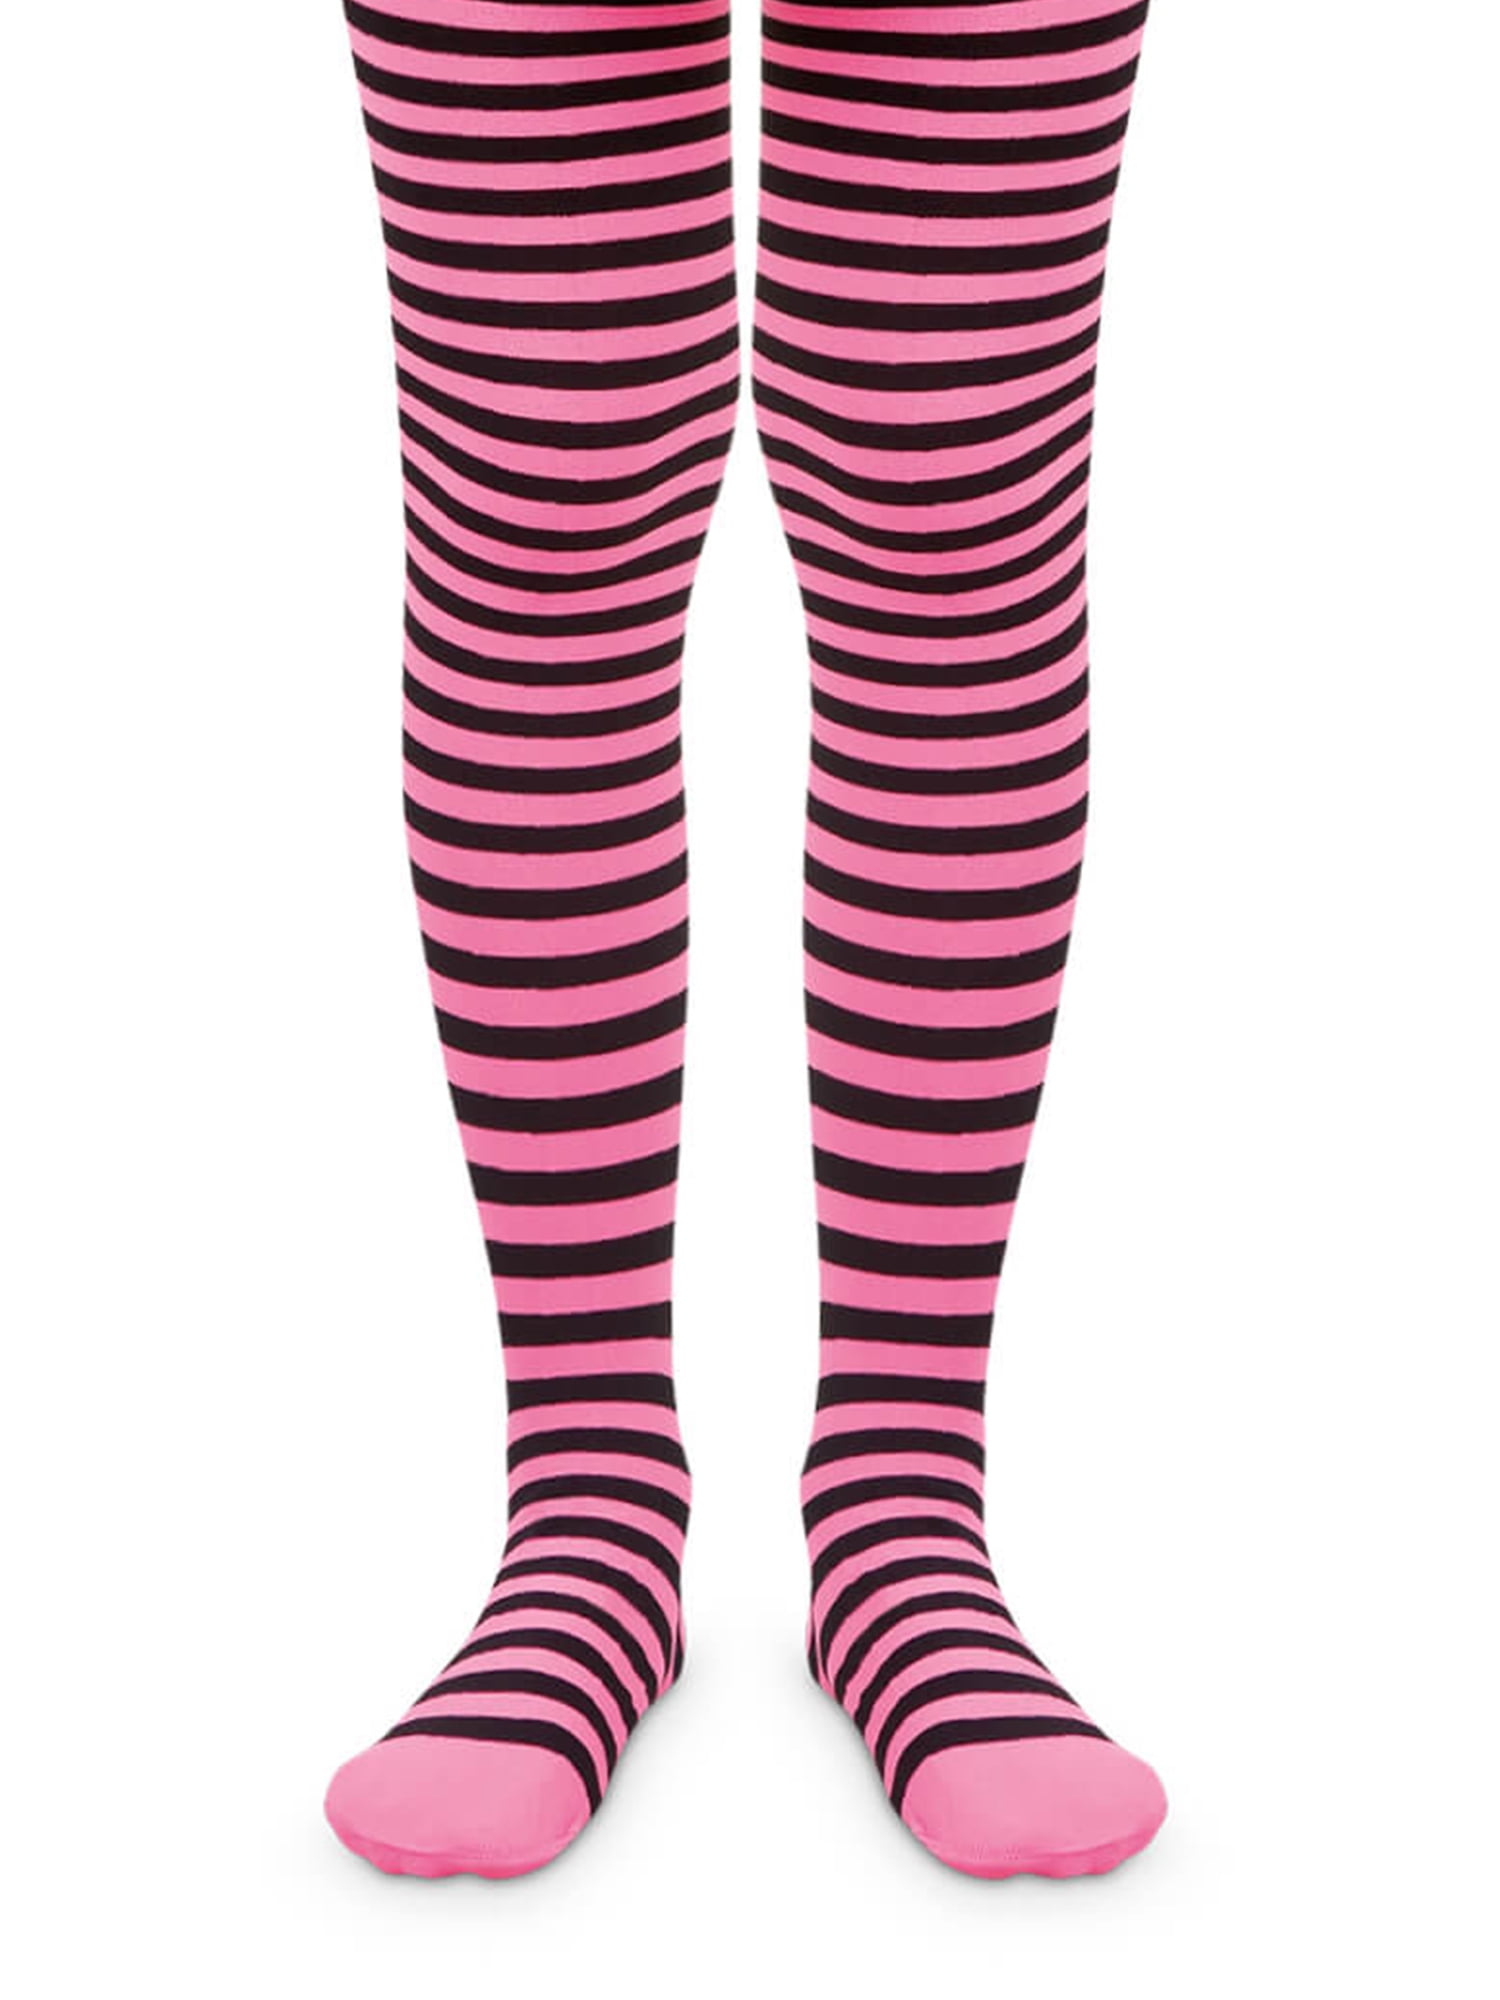 Jefferies Socks Girls Striped Tights 1-Pack, Sizes S-L 